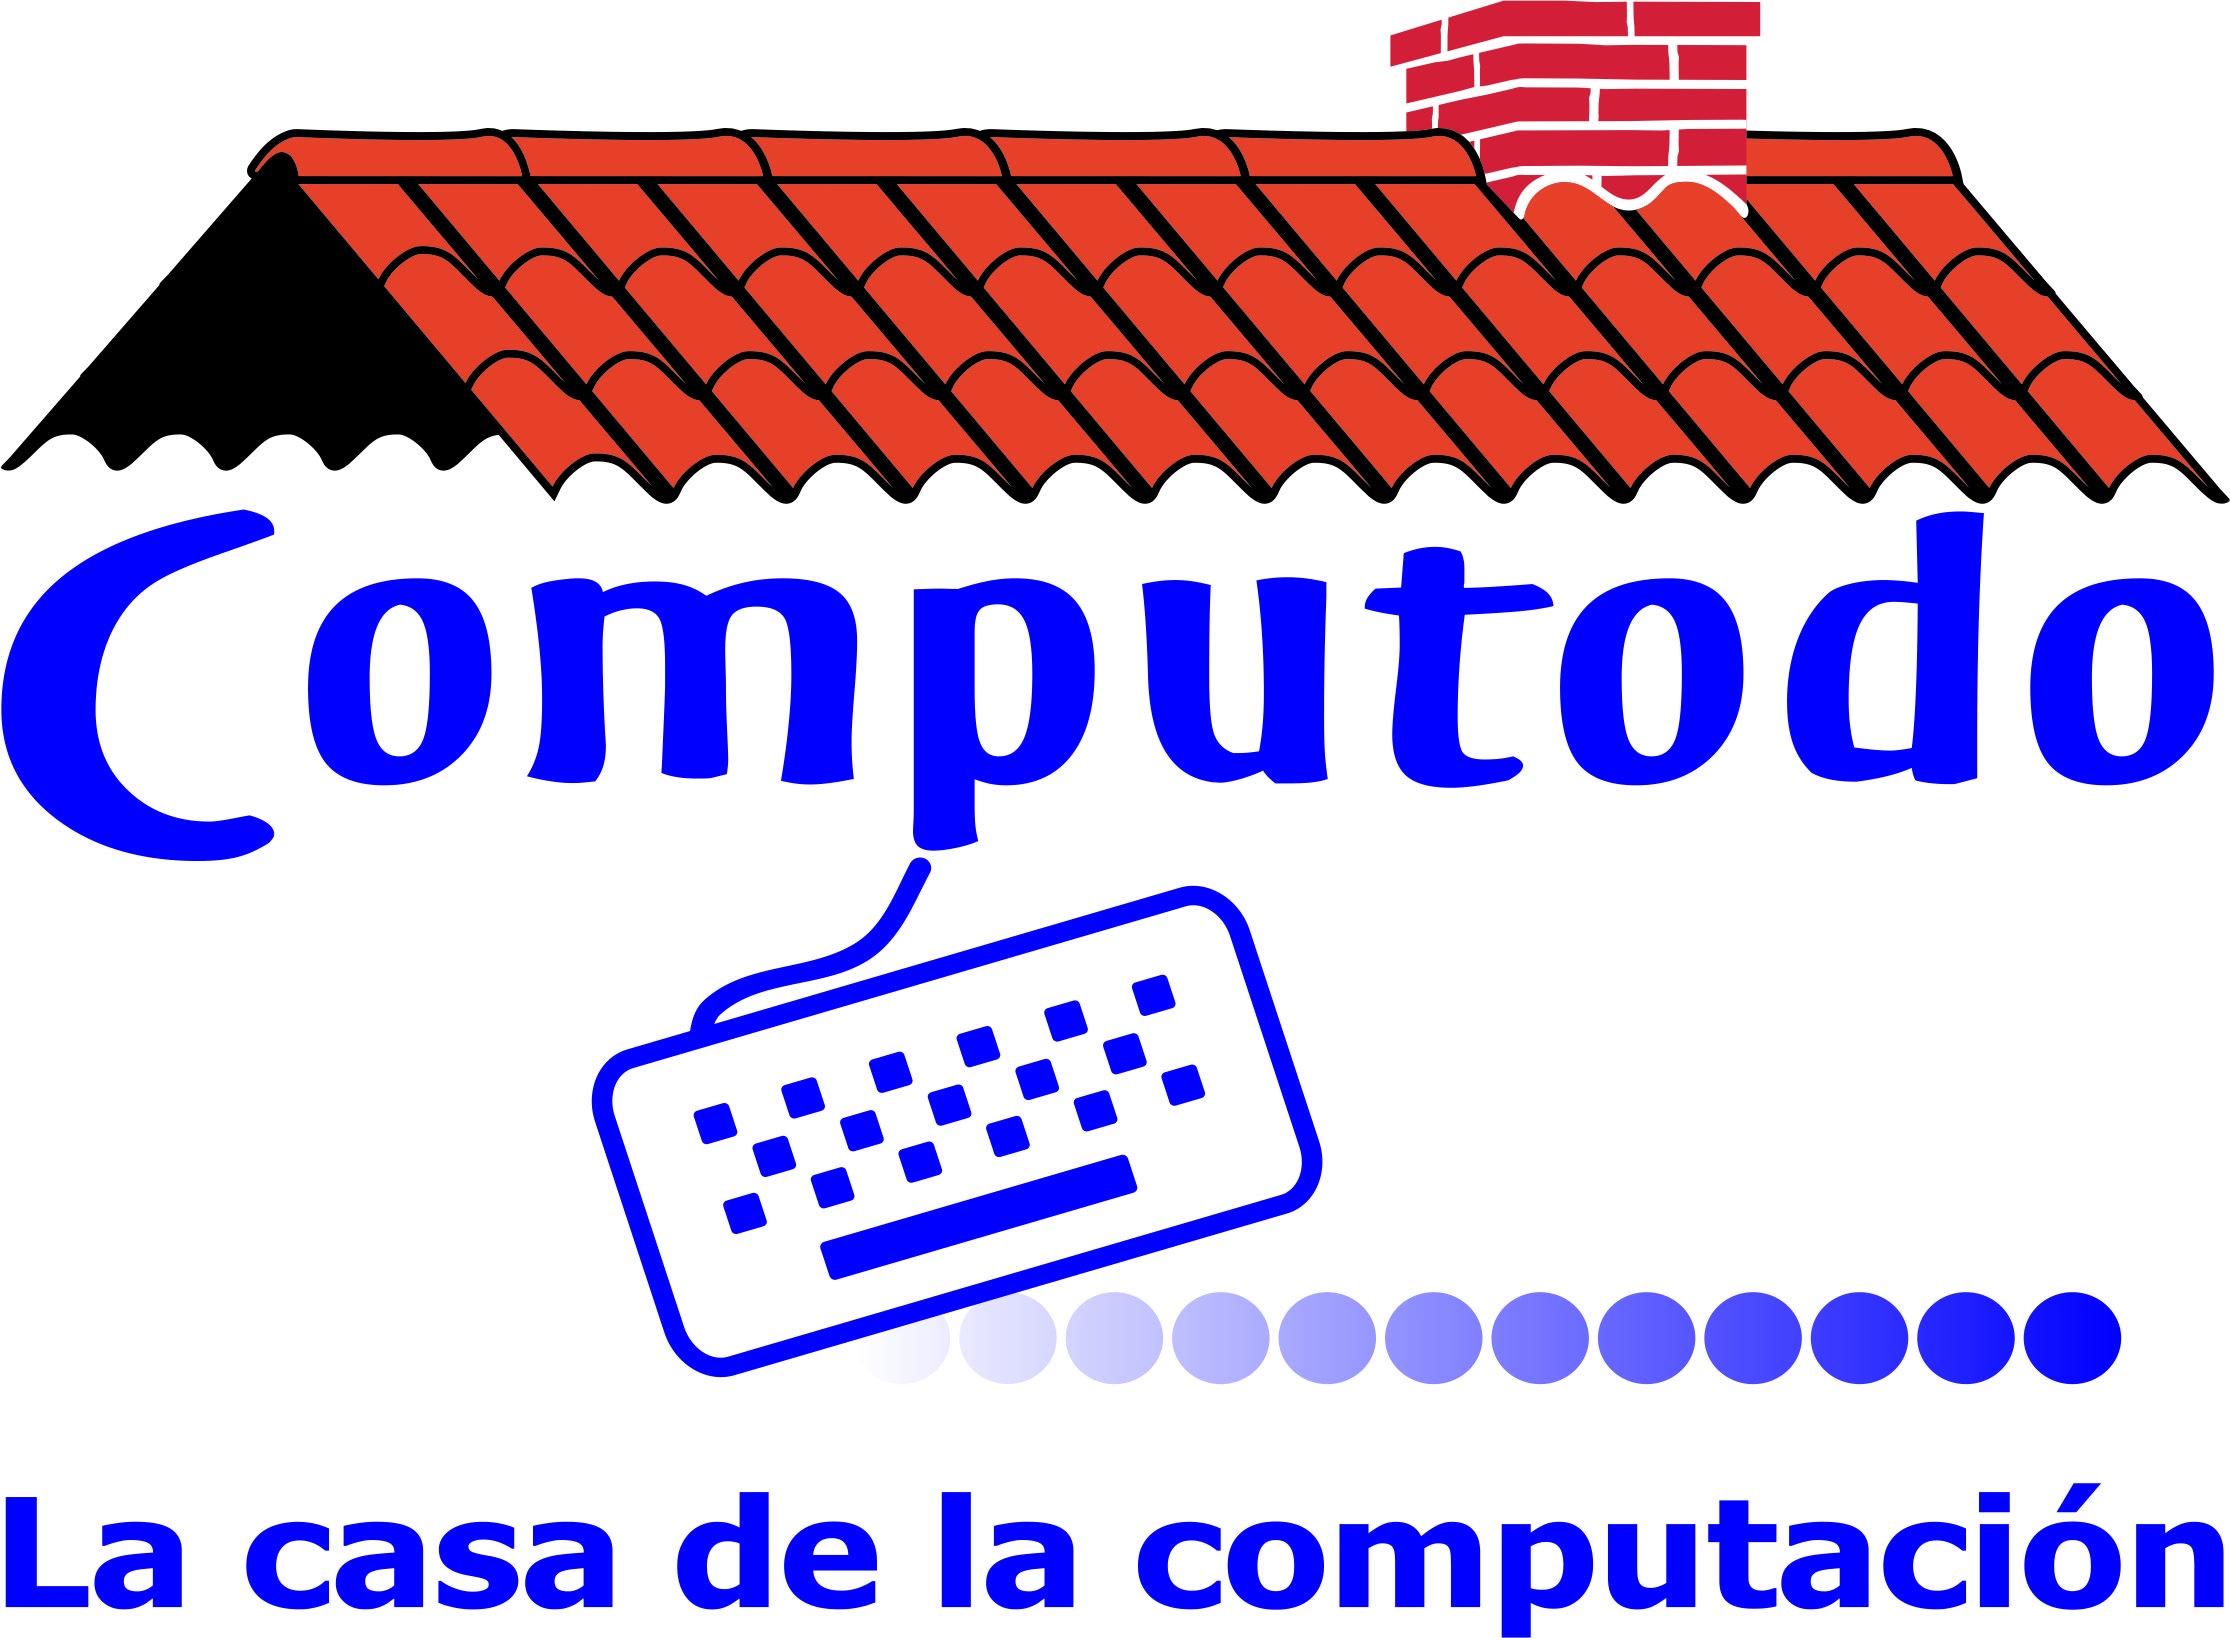 Computodo